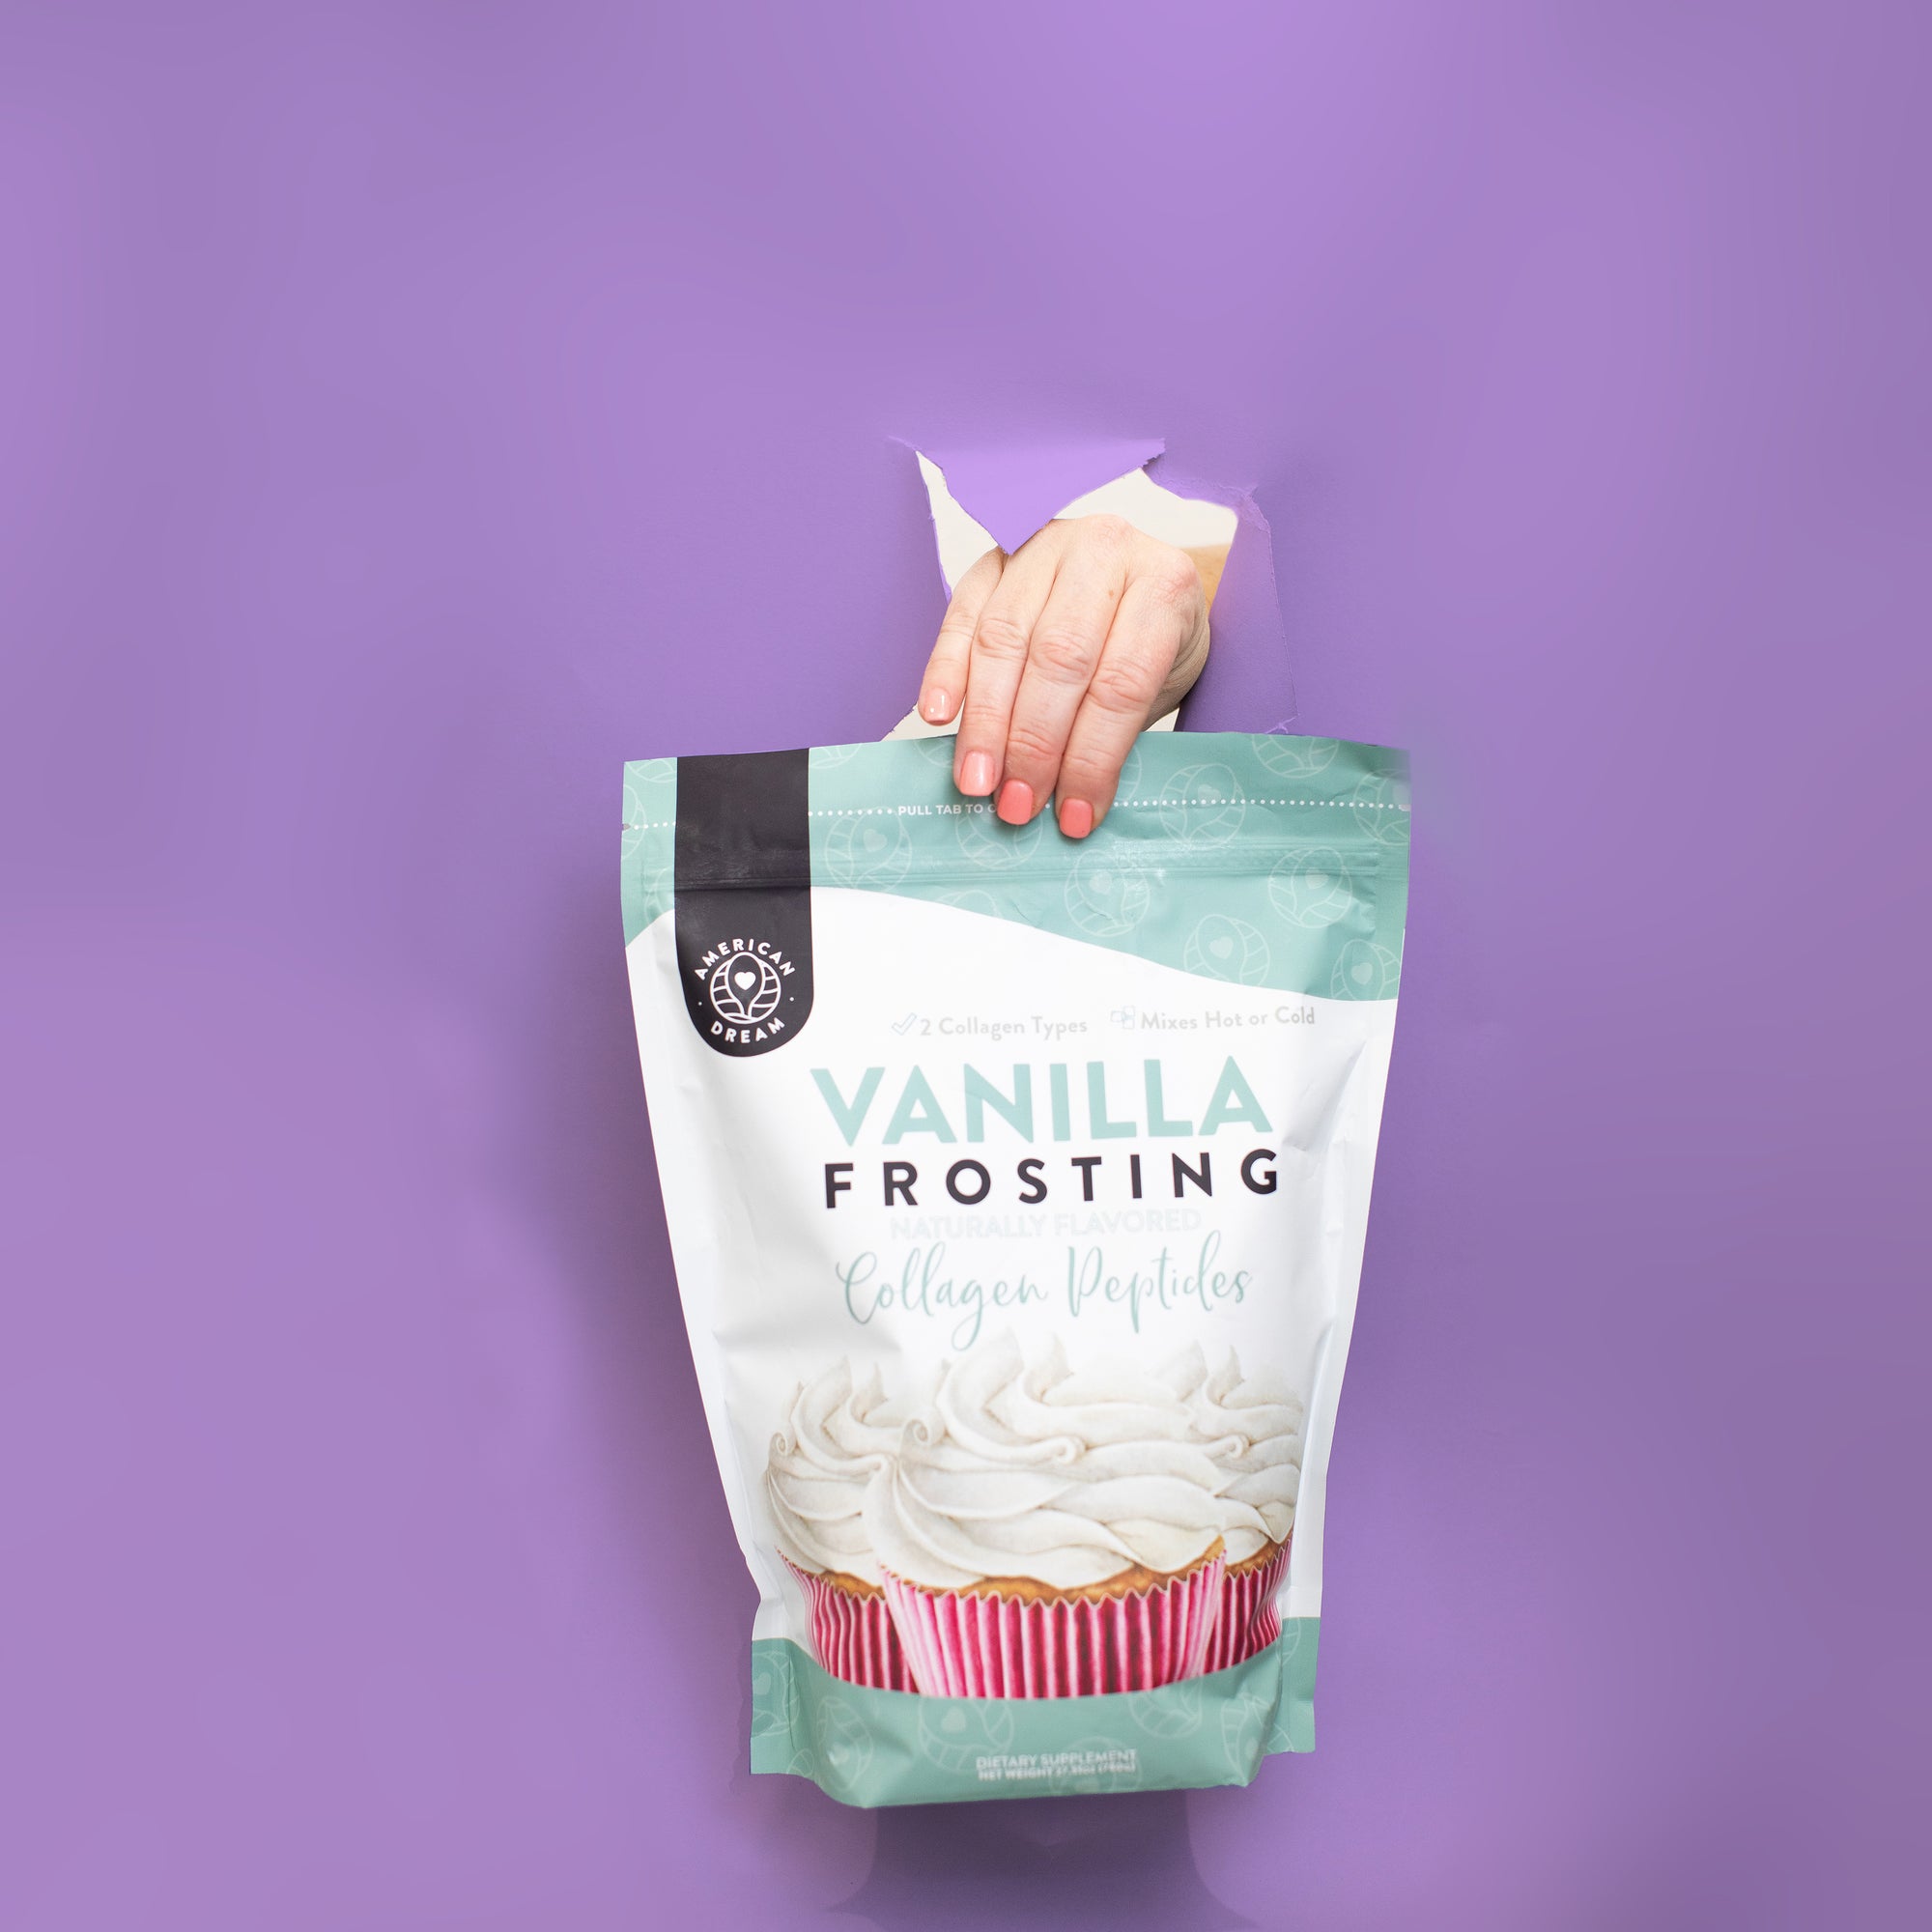 Vanilla Frosting Collagen Peptides